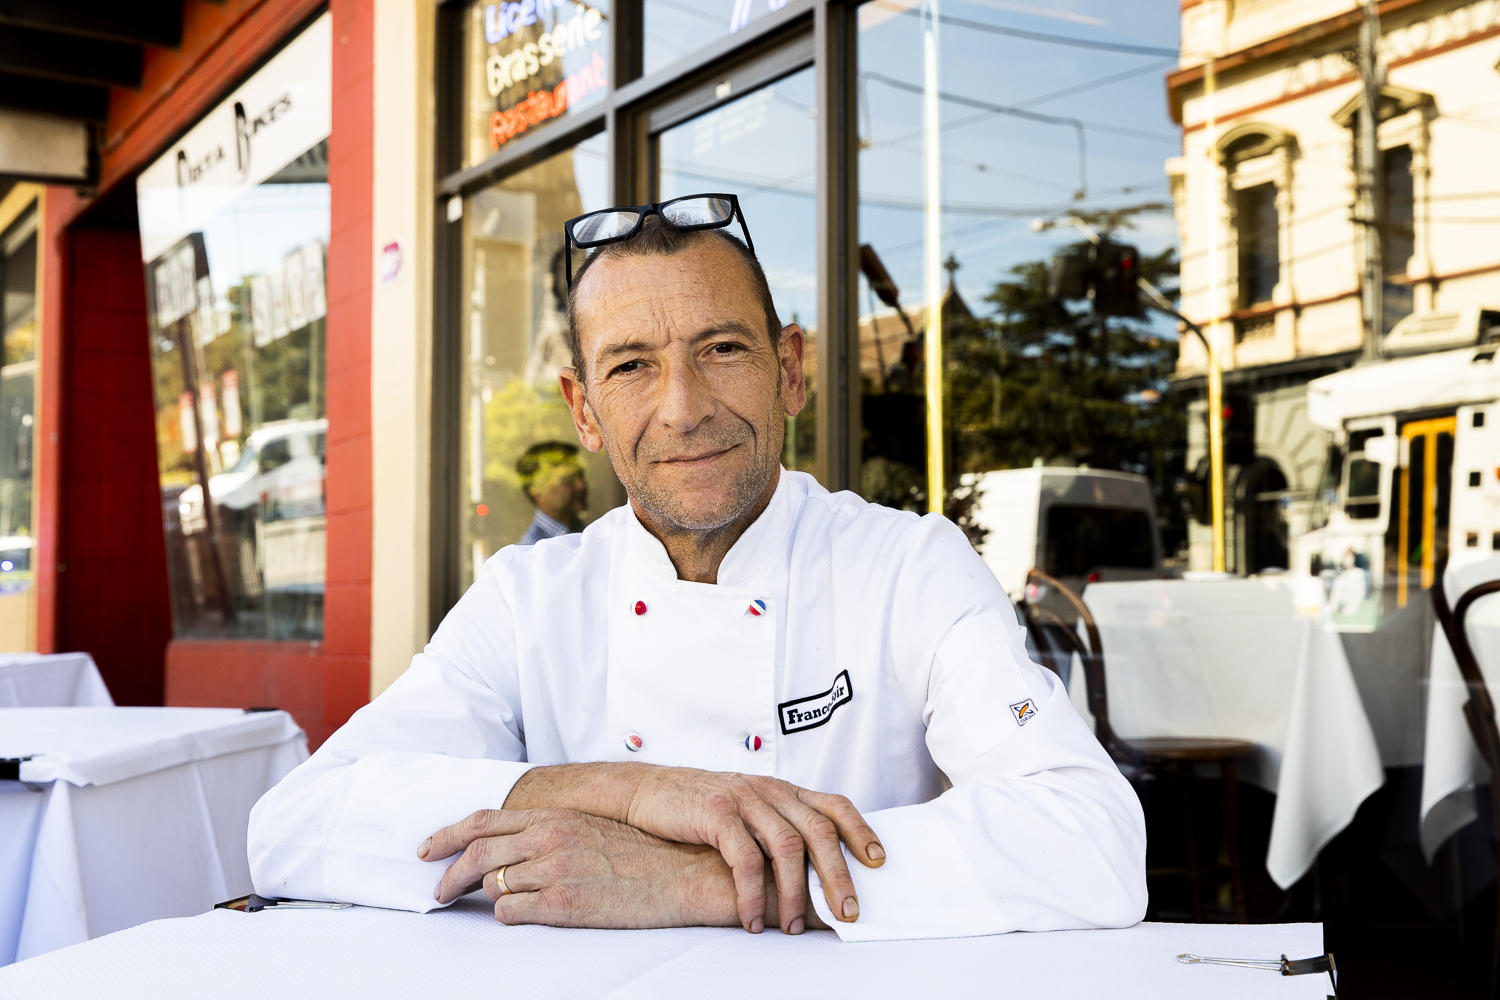 Geraud Fabre, France-Soir's head chef since 2000
